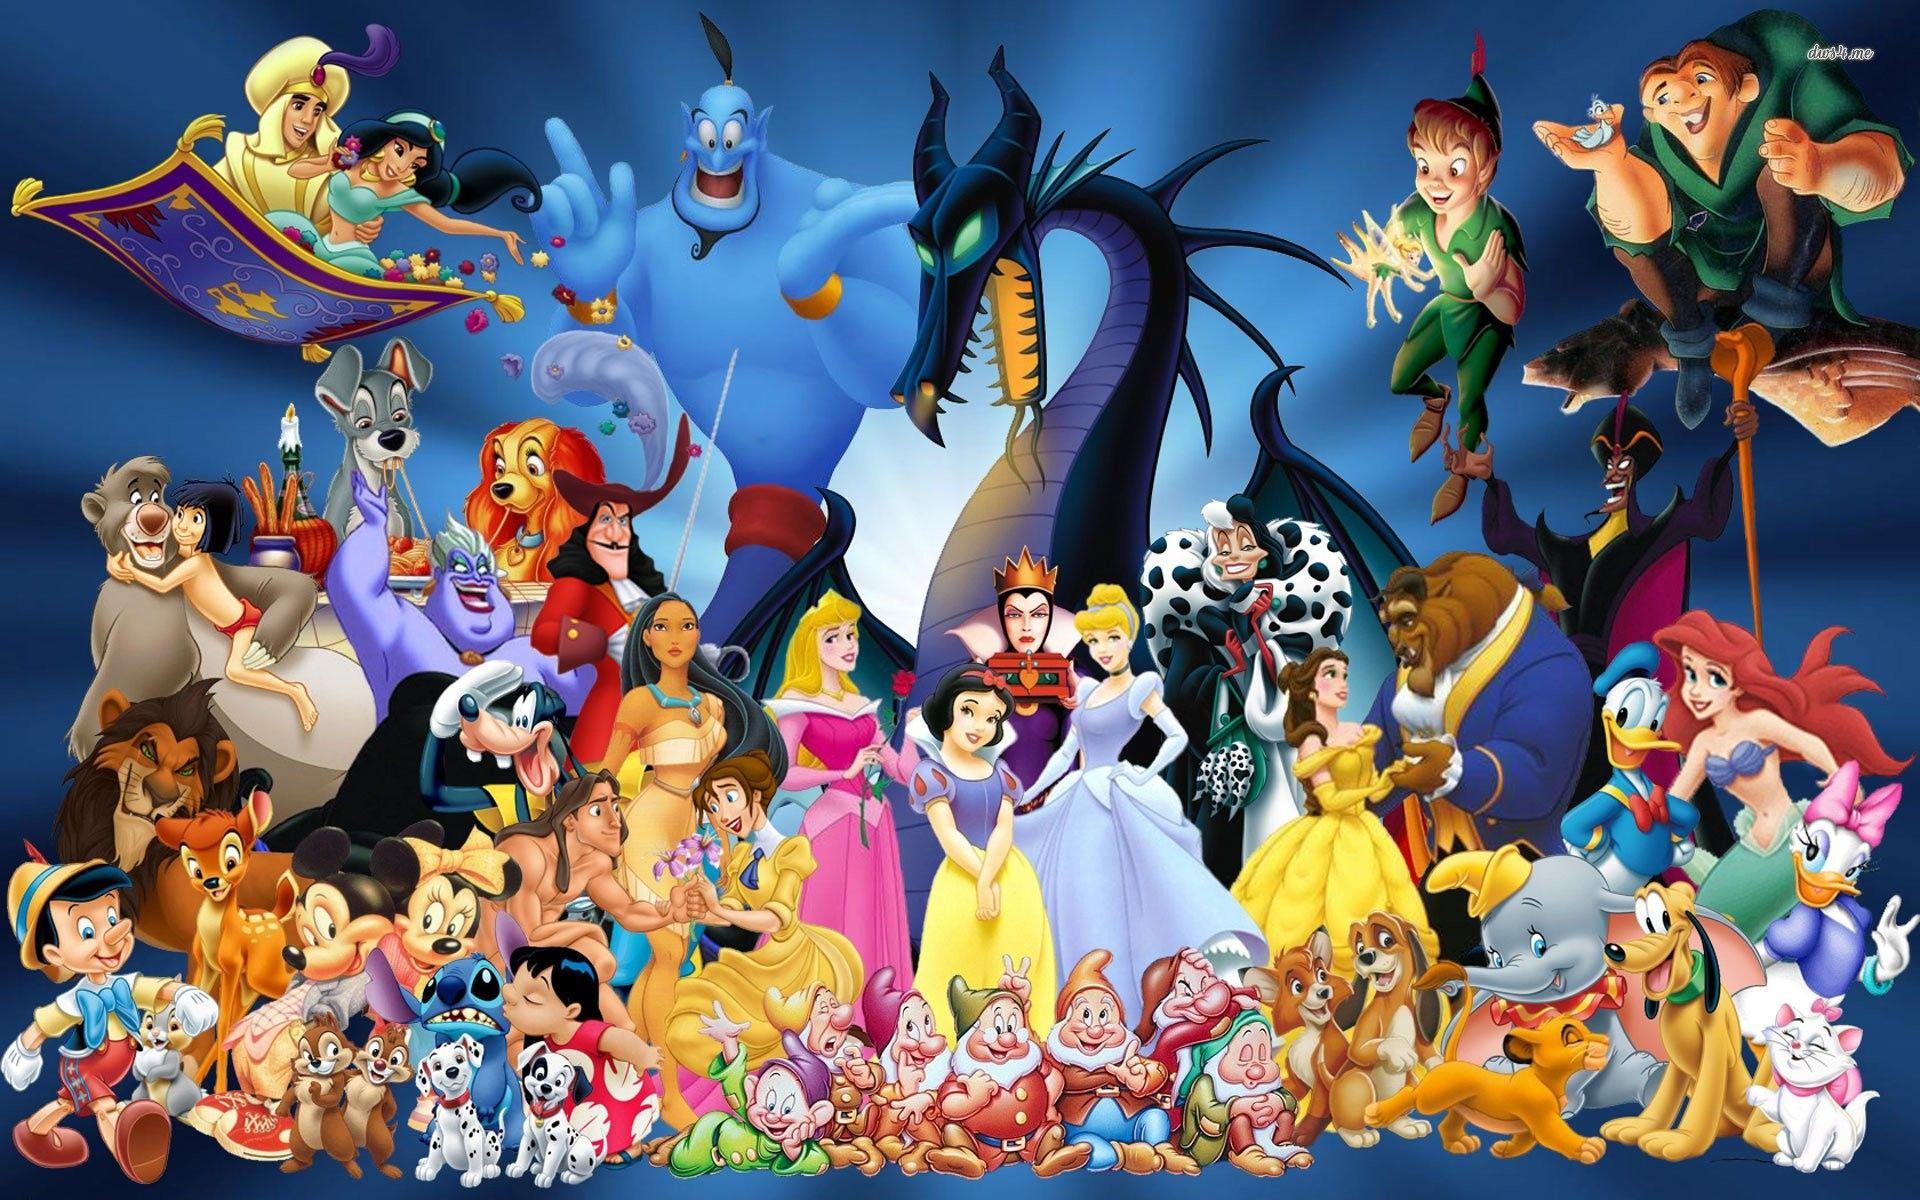 Disney Ipad Wallpapers Top Free Disney Ipad Backgrounds Wallpaperaccess